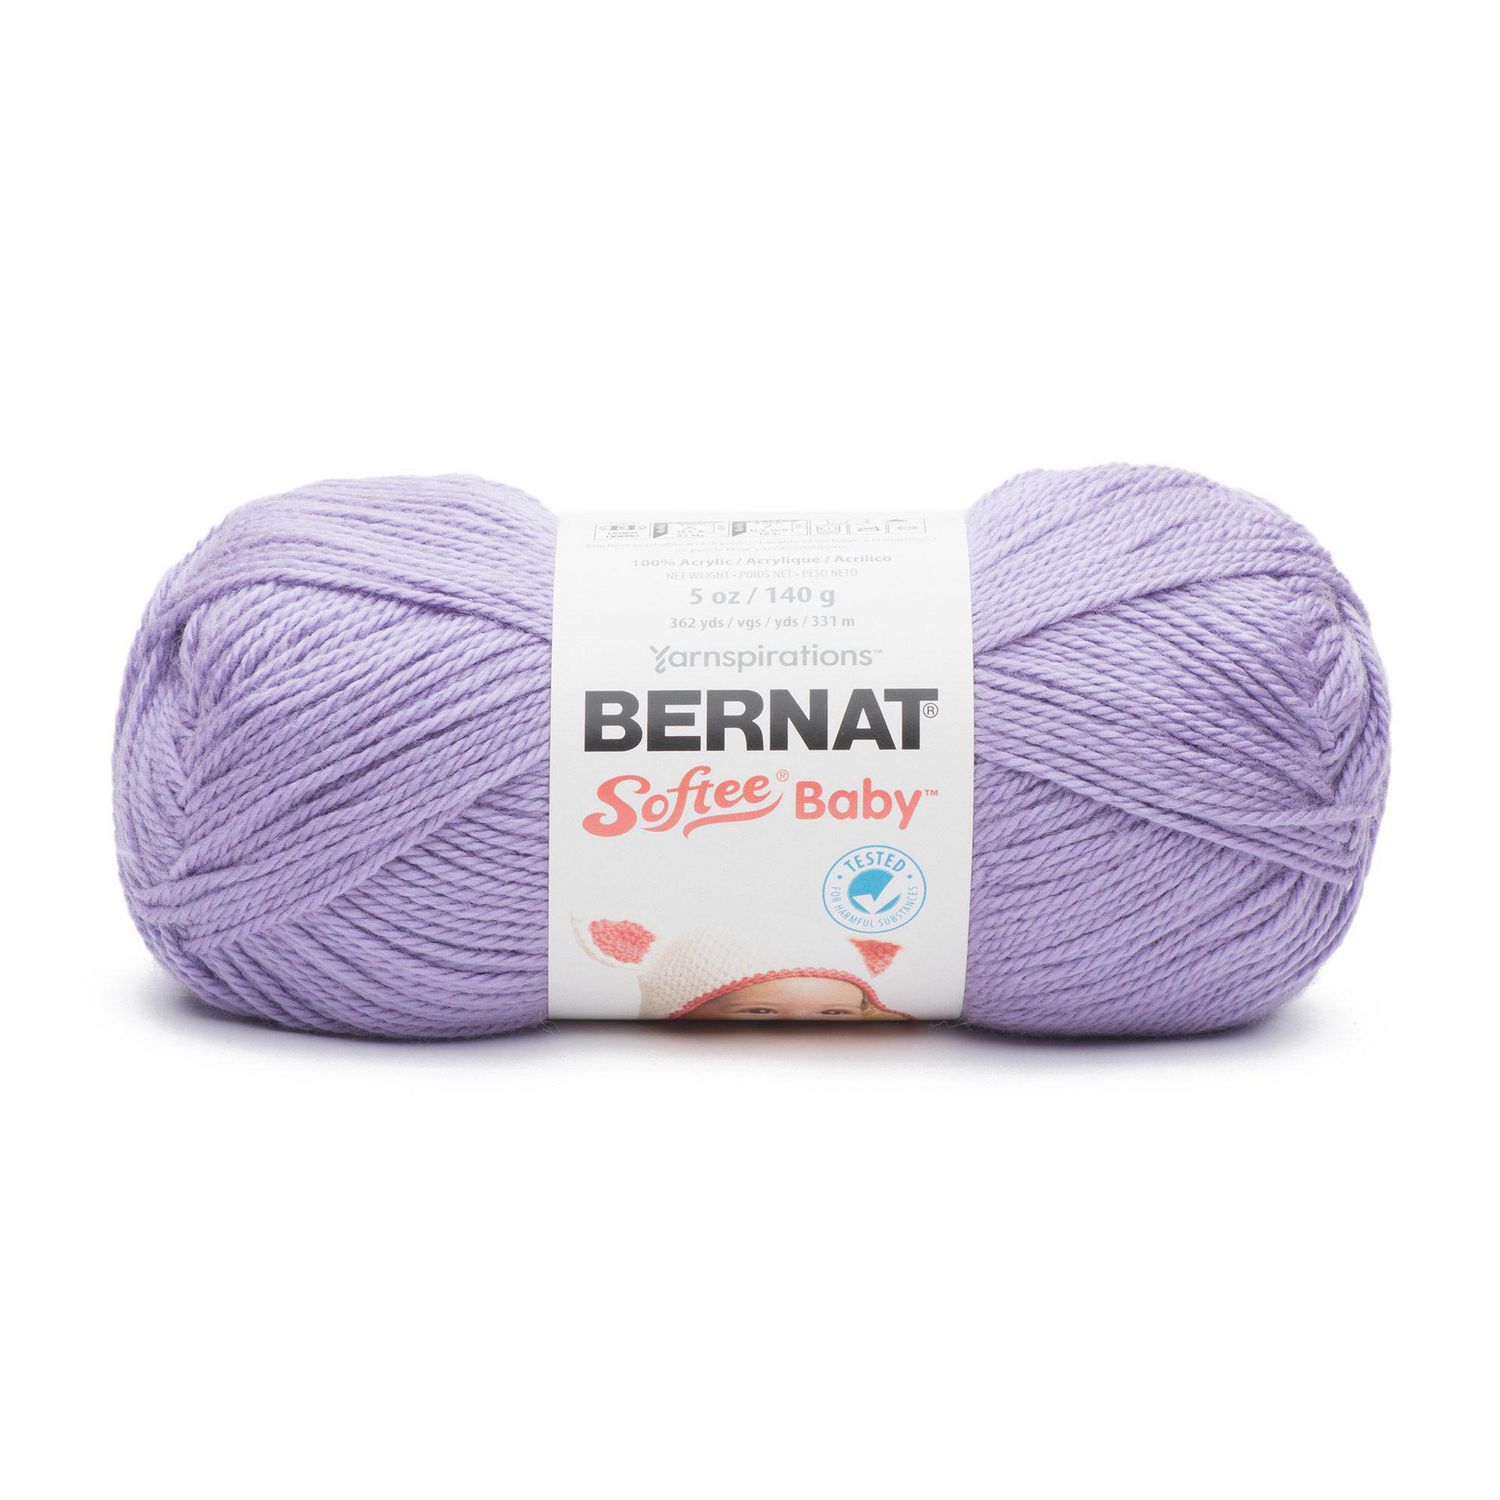 Bernat Softee Baby Baby Pink Marl Yarn - 3 Pack of 141g/5oz - Acrylic - 3  DK (Light), 3 - Kroger